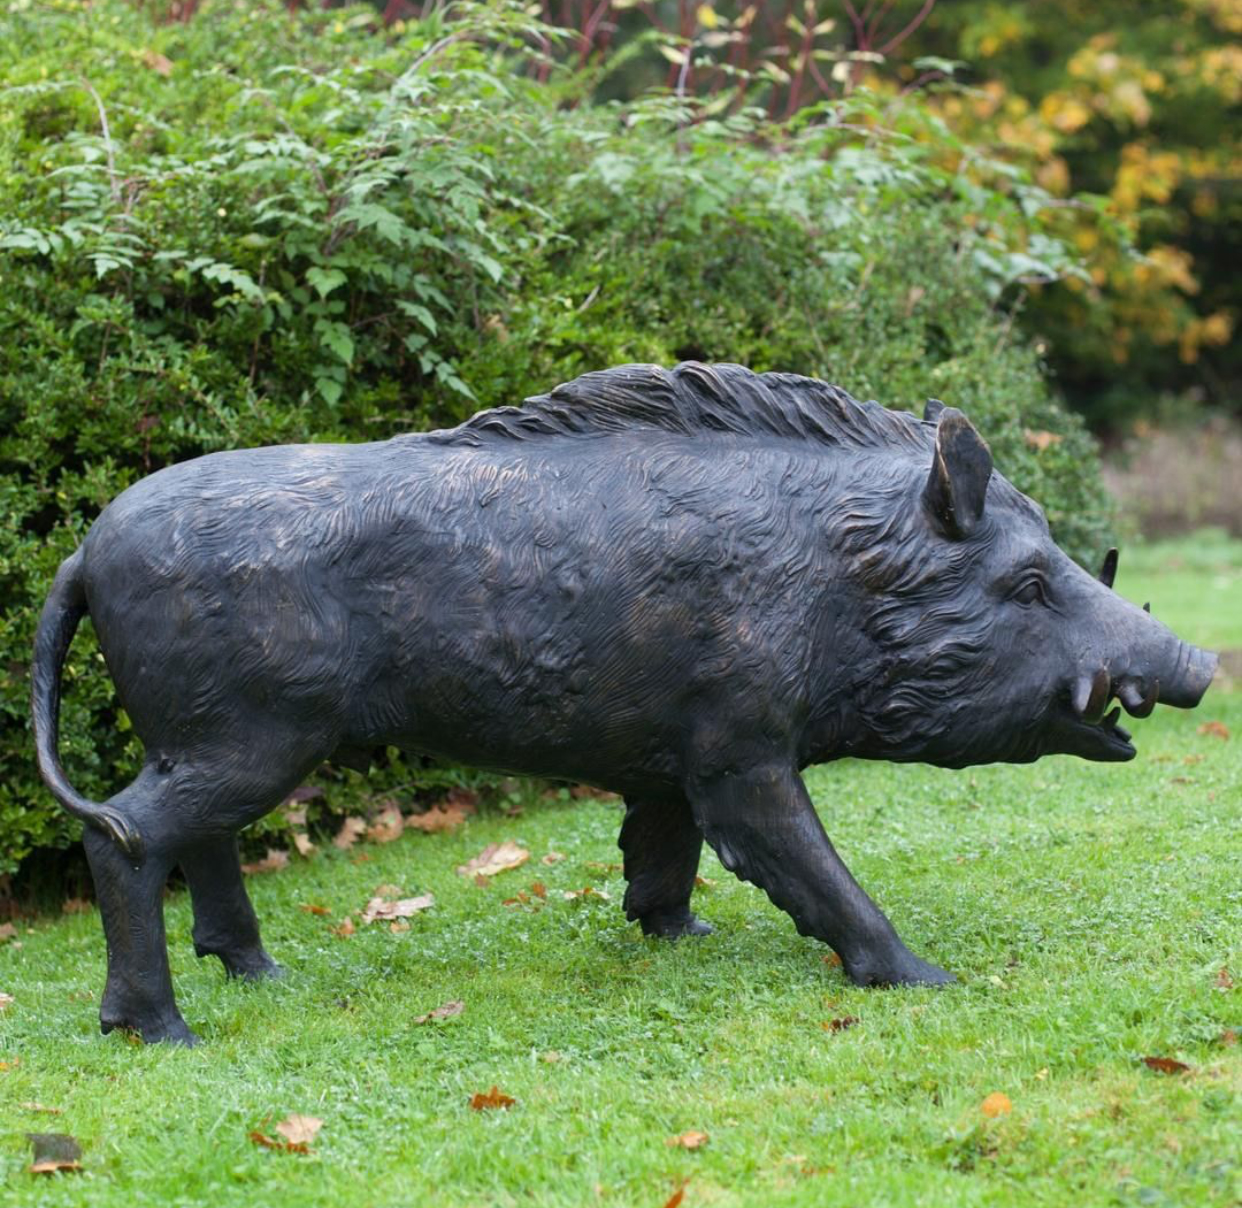 The wild boar sculpture